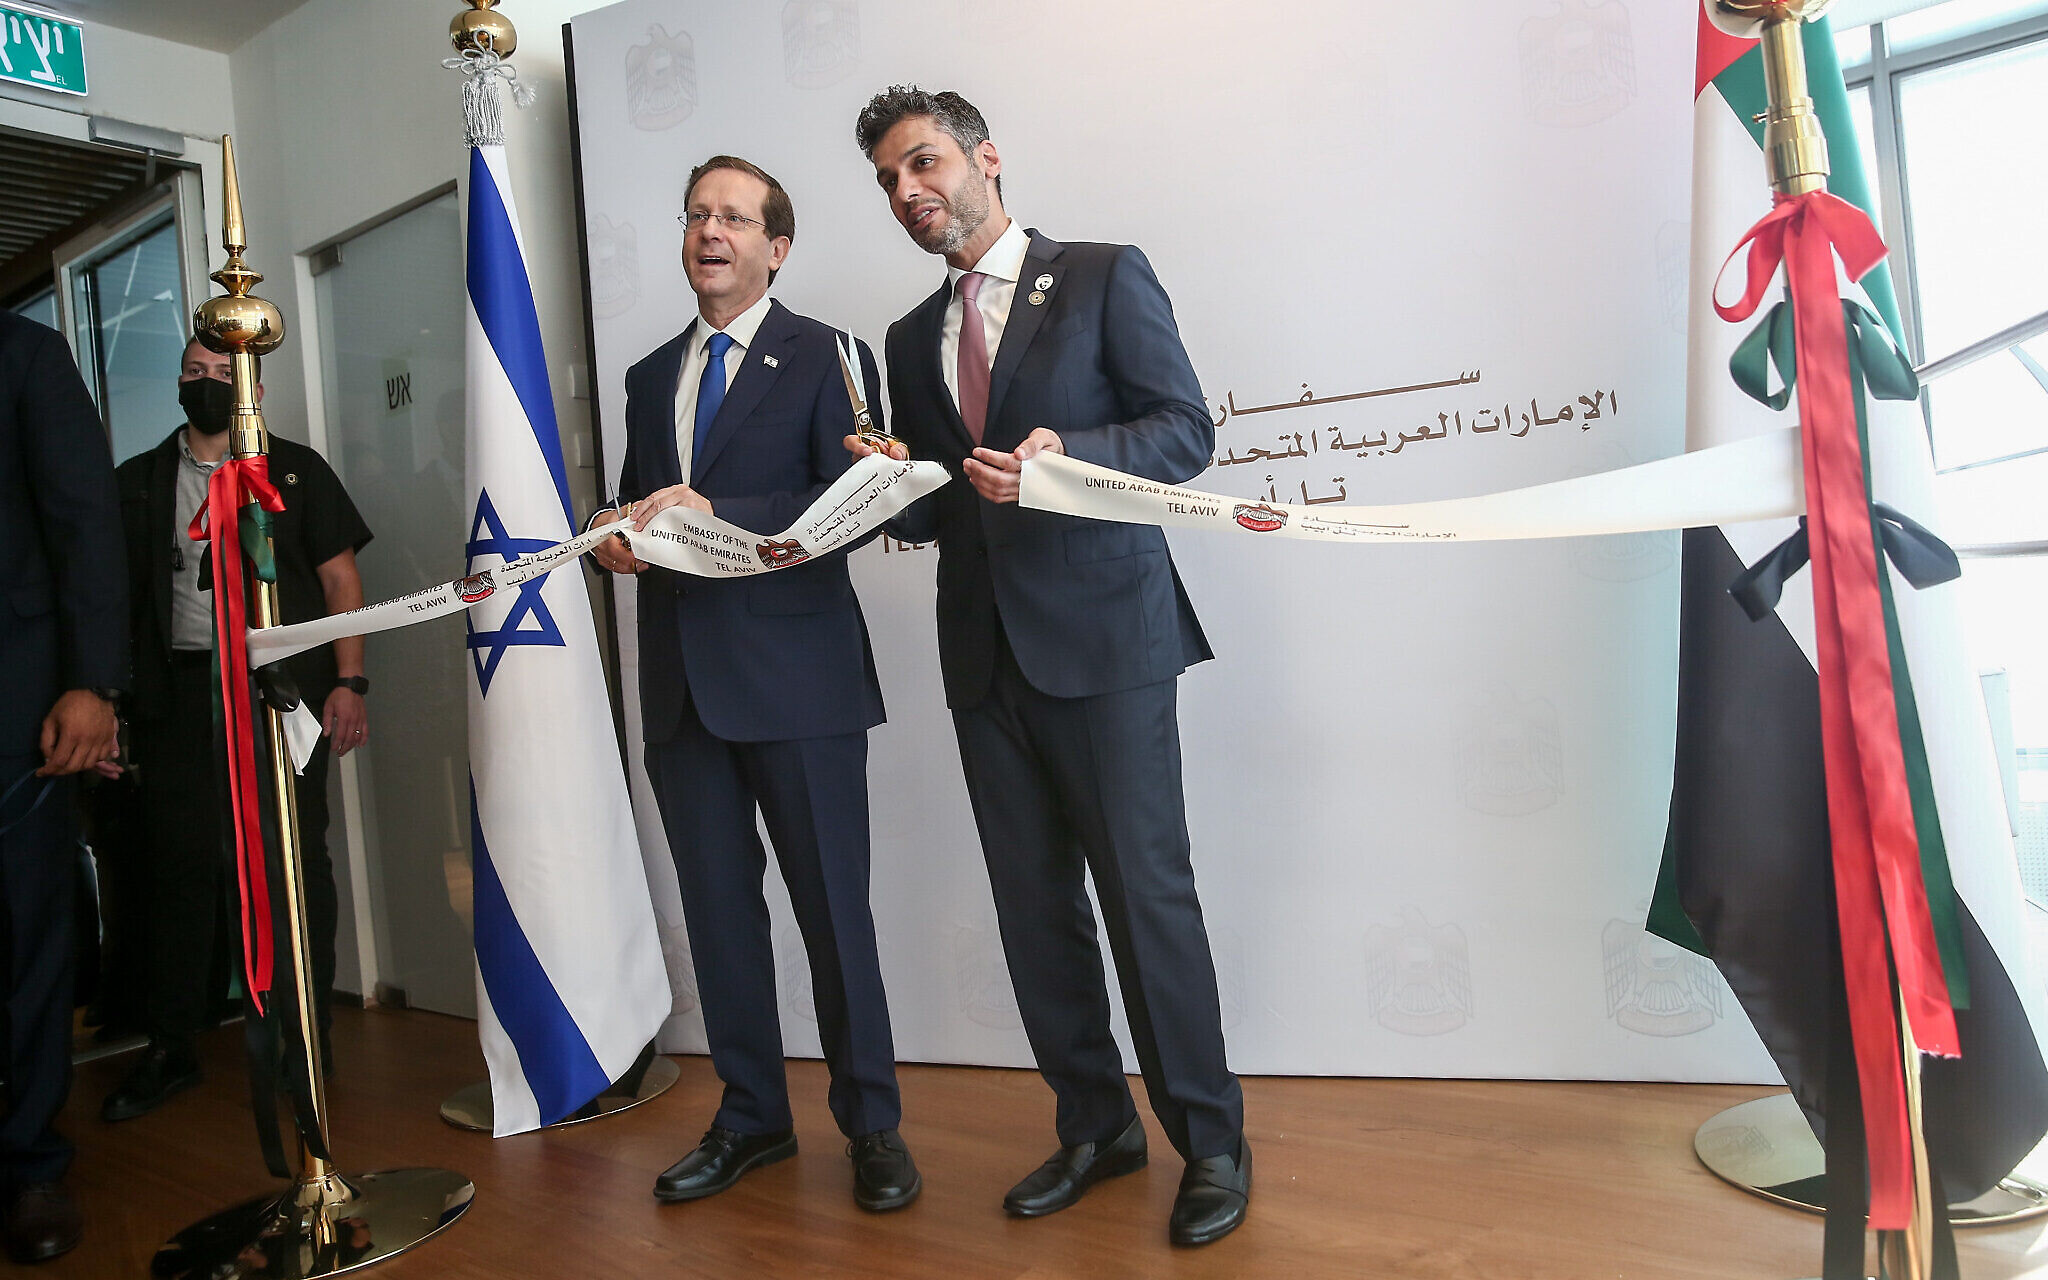 Just The Beginning Uae Opens Tel Aviv Embassy As Sides Hail Ties The Times Of Israel